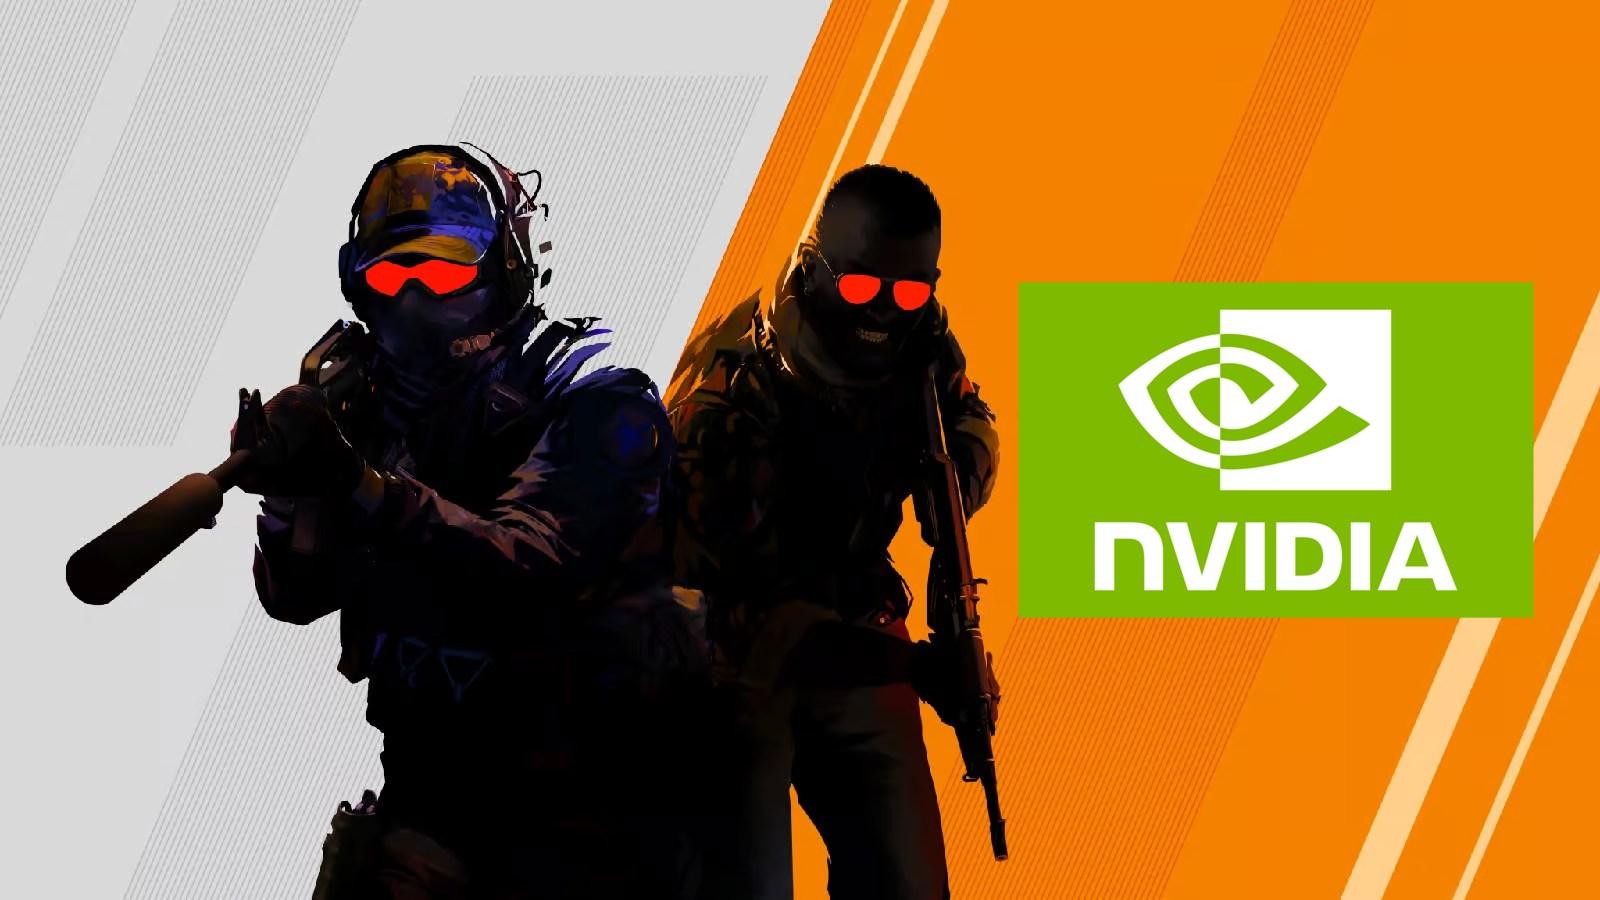 Counter Strike 2 art with nvidia logo